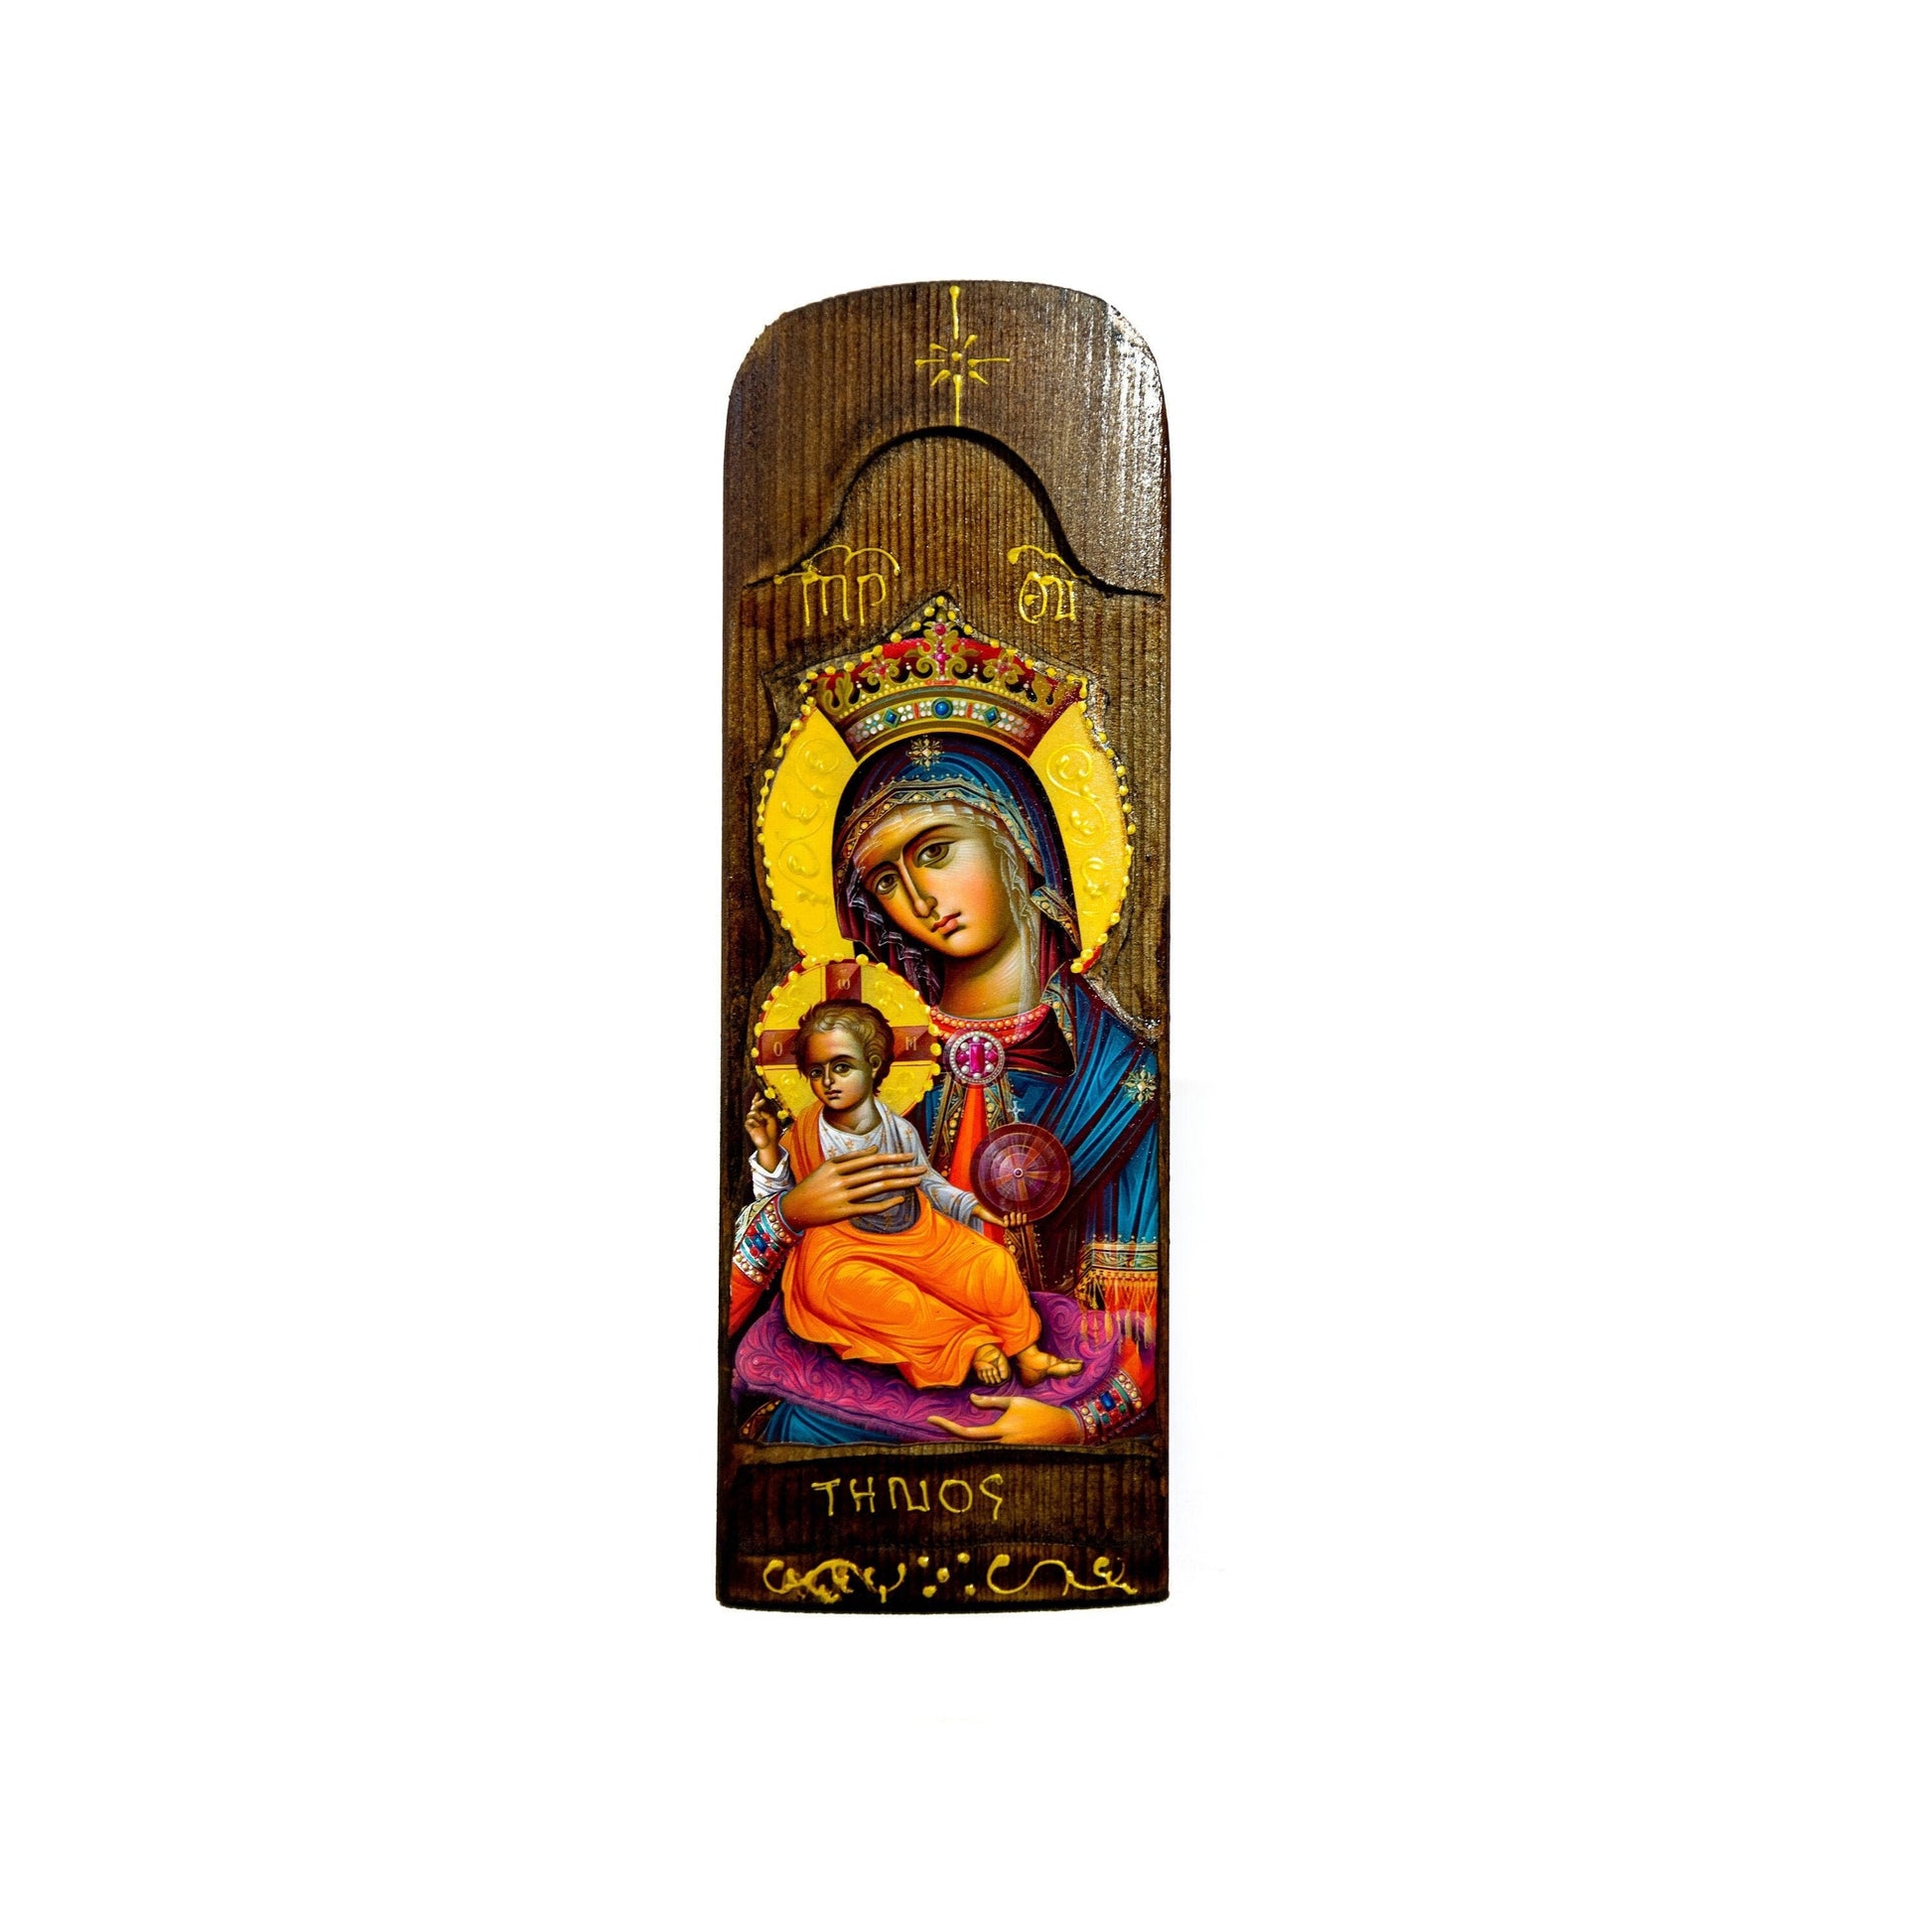 Virgin mary icon panagia, handmade greek orthodox icon, mother of god byzantine art, theotokos wall hanging wood plaque religious decor TheHolyArt